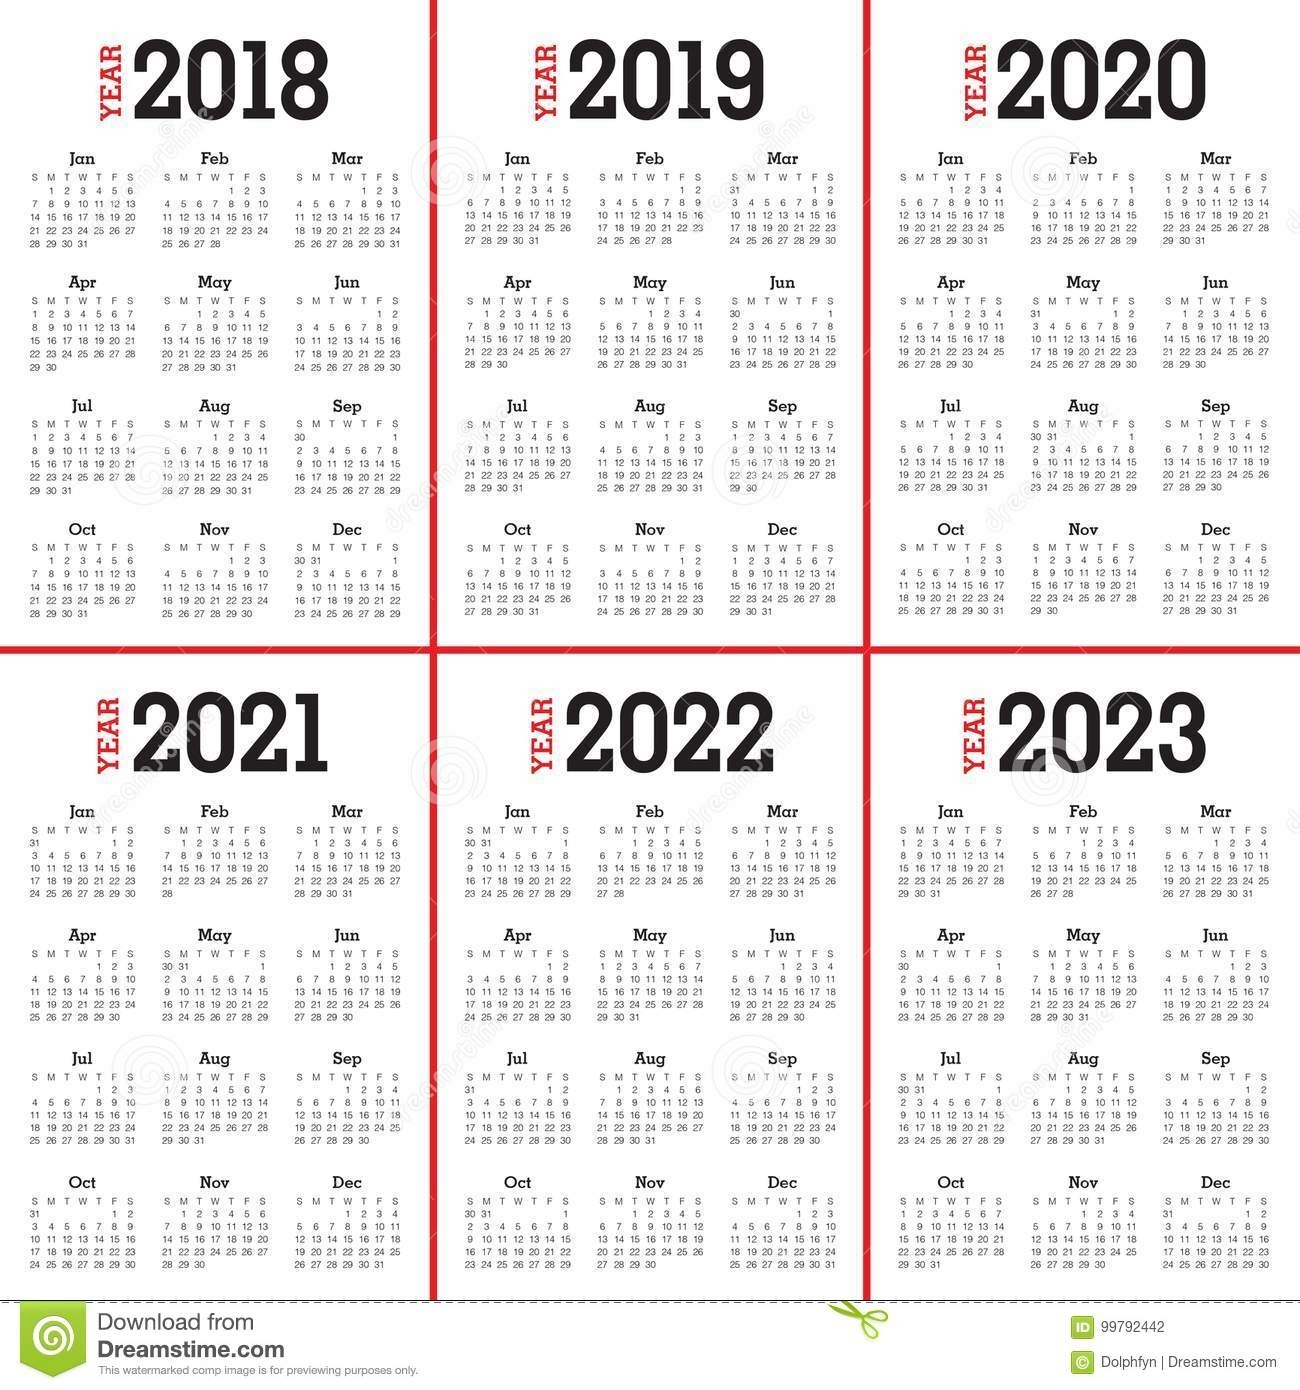 La County Calendar 2023